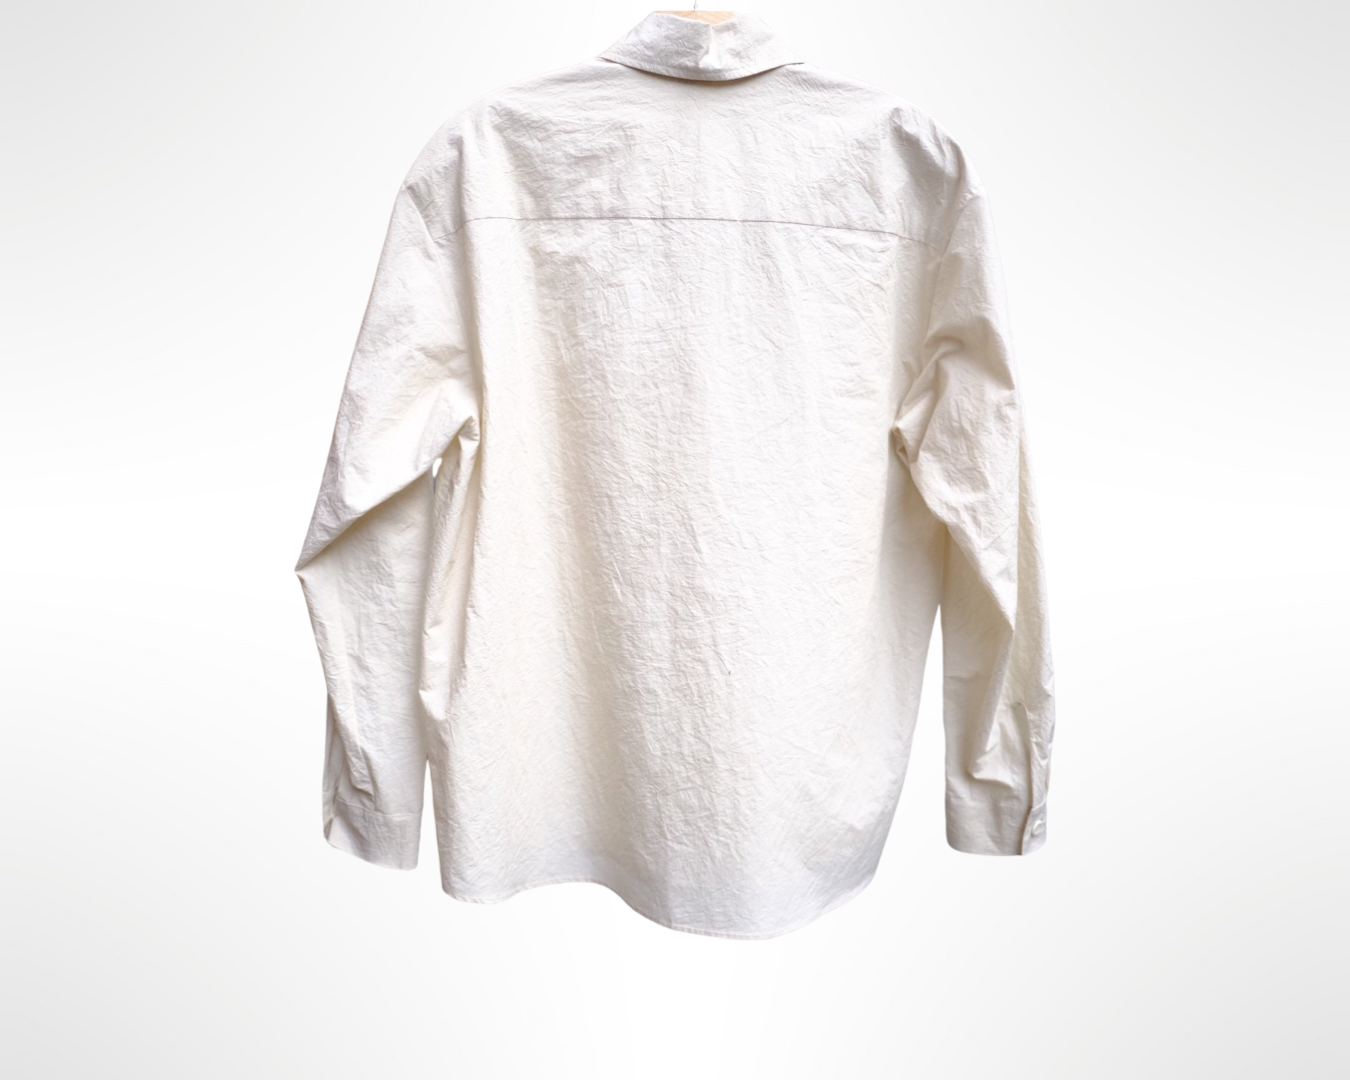 tent shirt in cotton/linen typewriter cloth